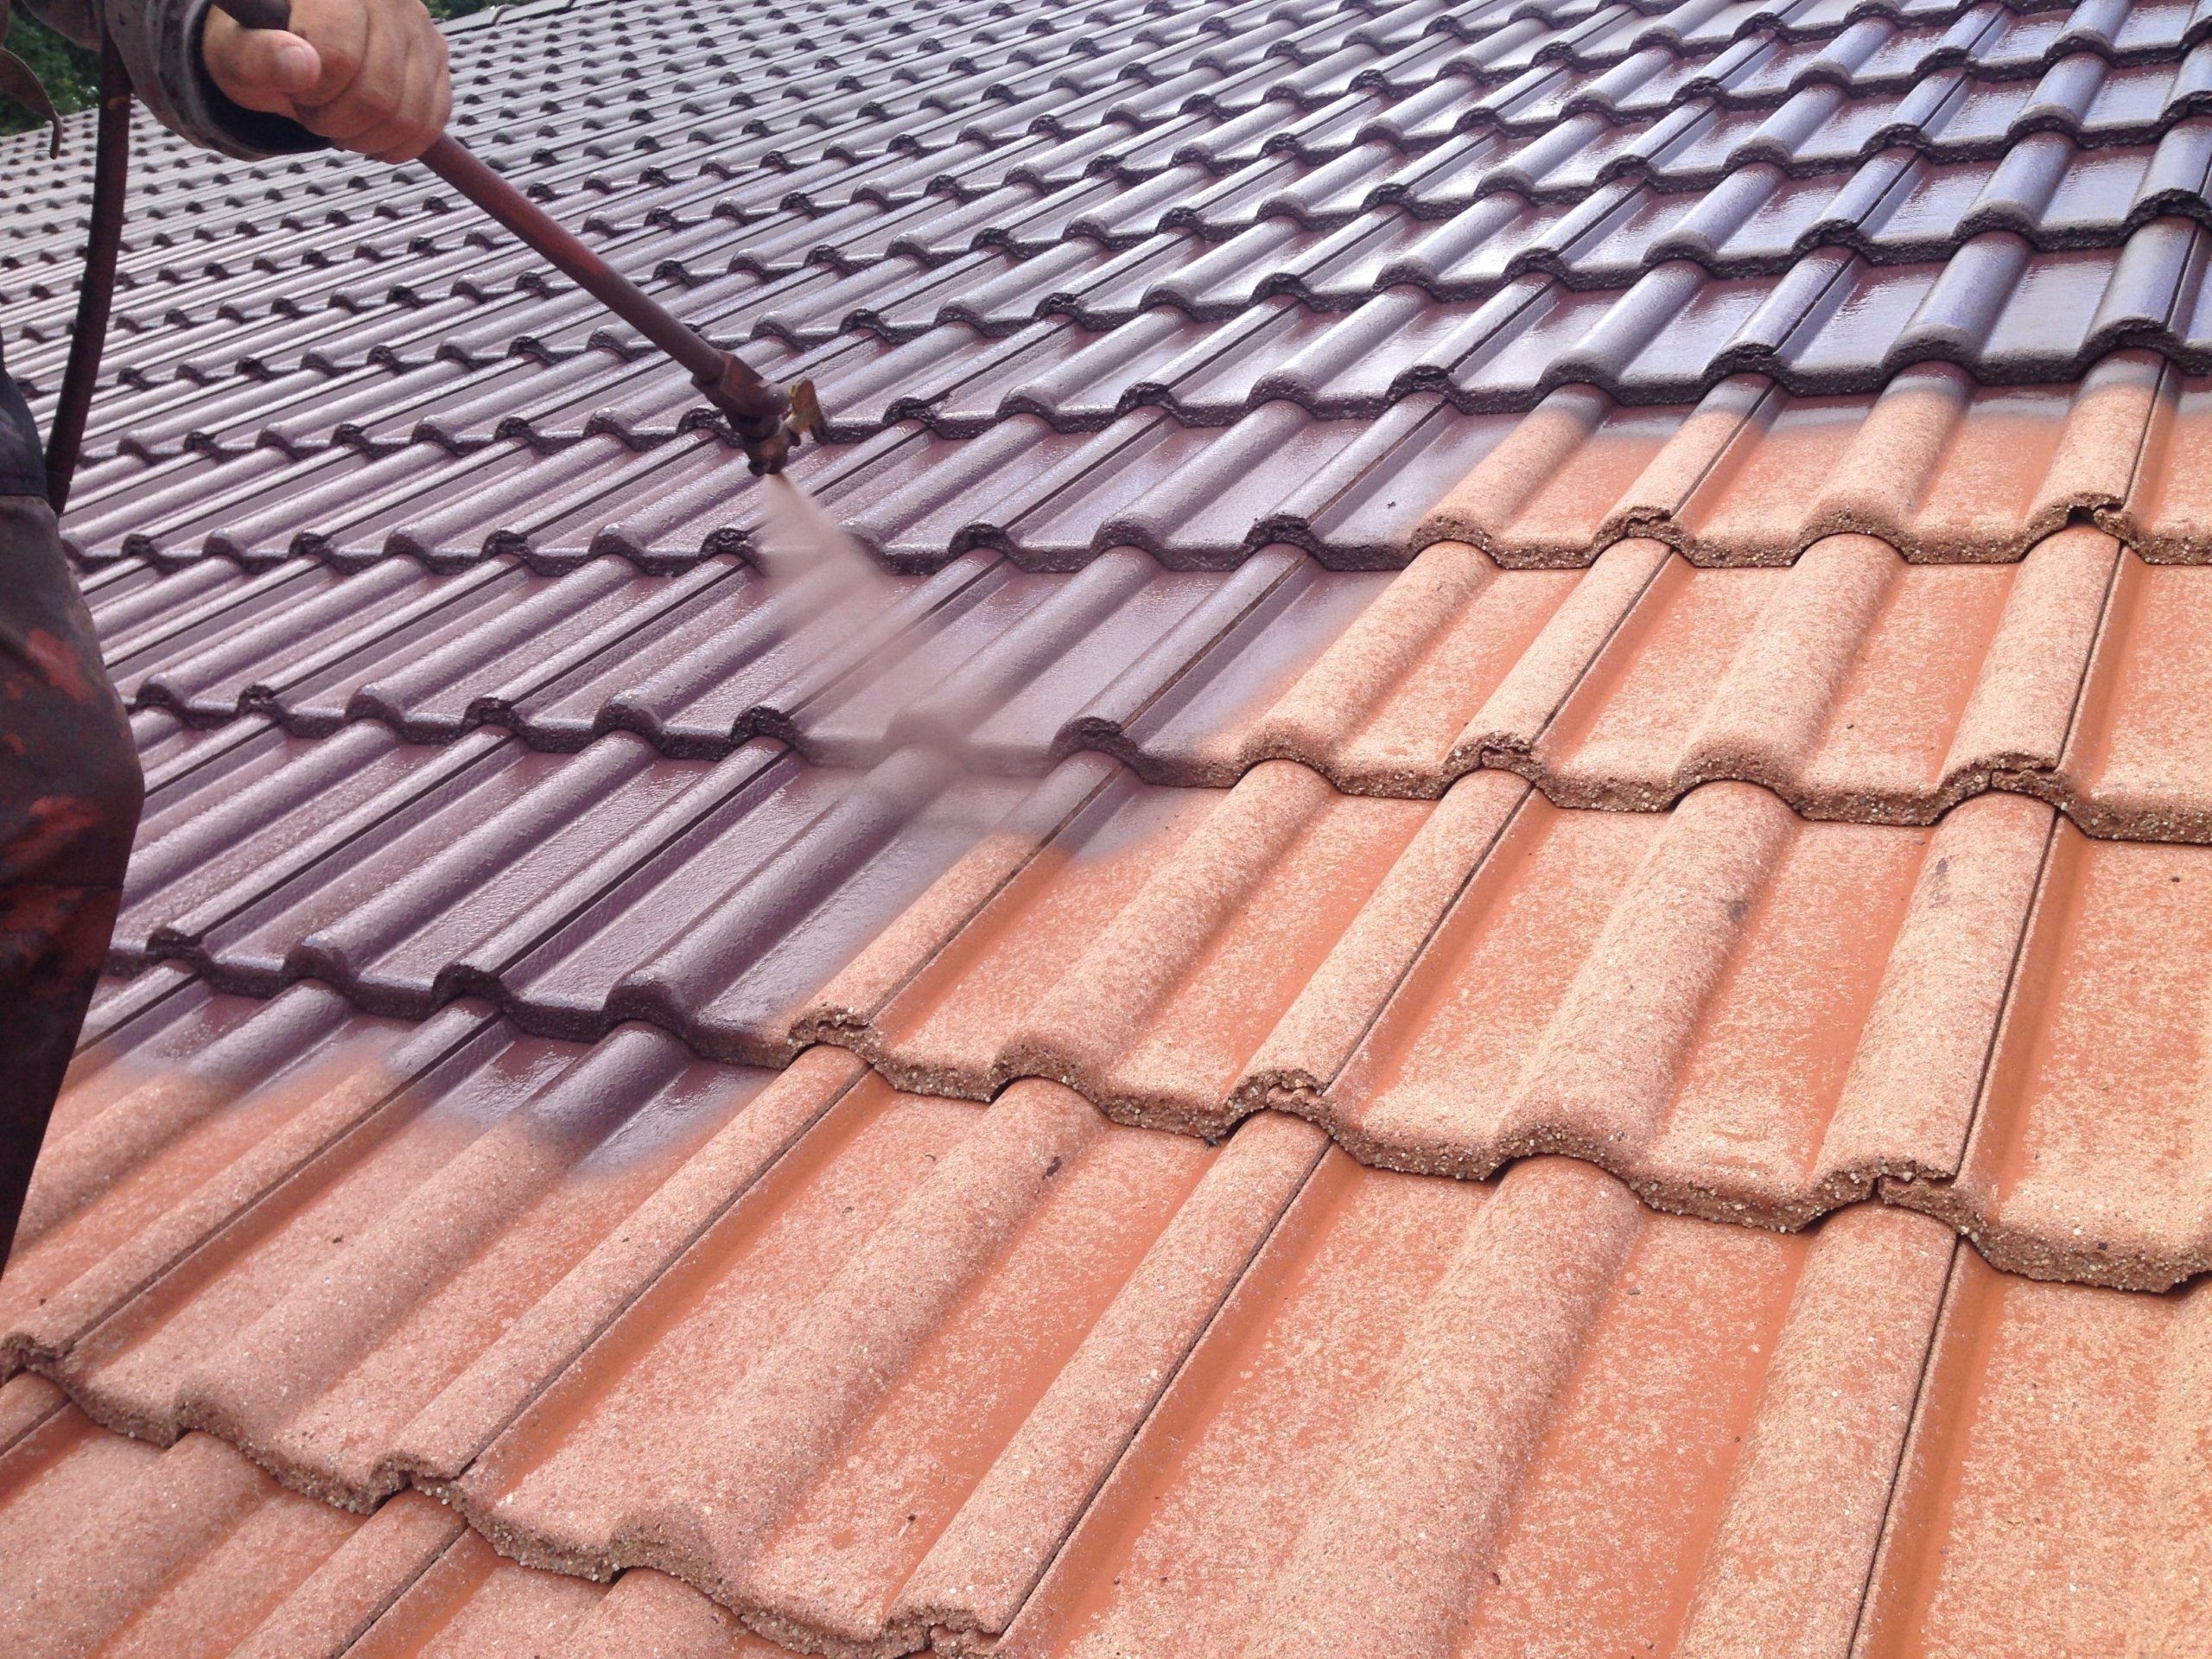 Czyszczenie dachów z powłoką dachową 7 dach beschichten mit airless spr%C3%BChger%C3%A4t in der farbe anthrazit scaled